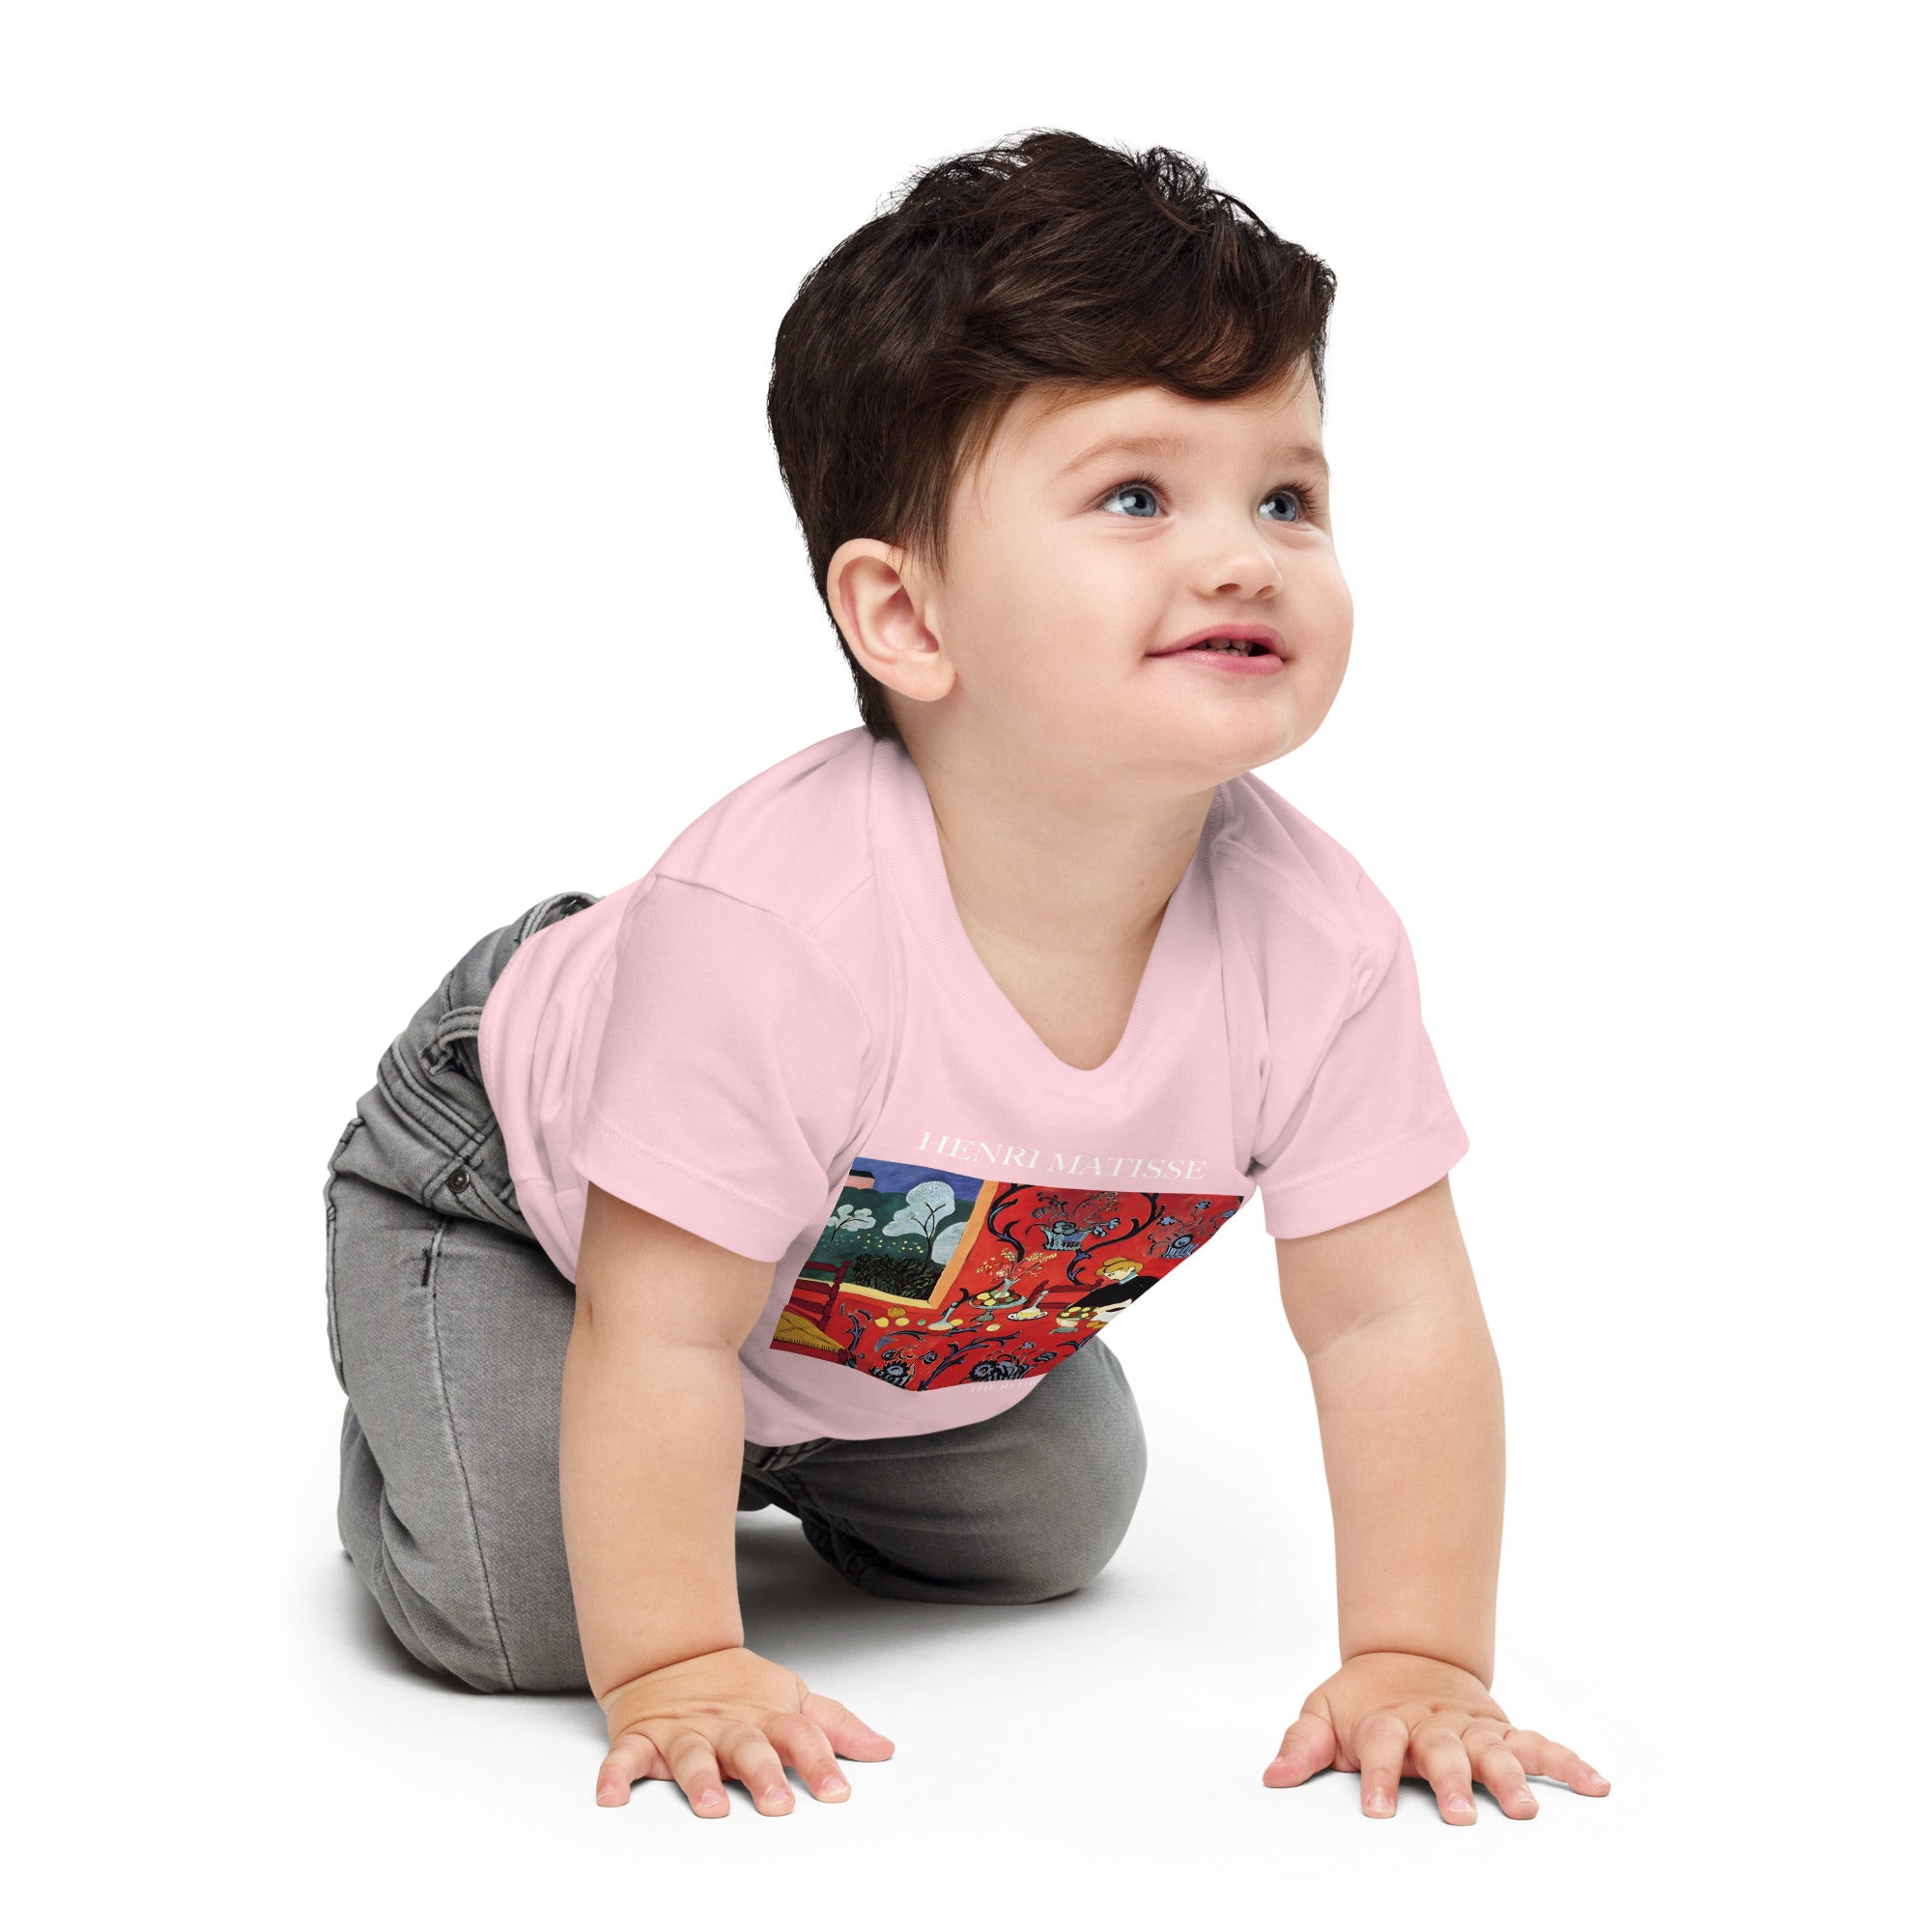 Henri Matisse 'The Red Room' Famous Painting Baby Staple T-Shirt | Premium Baby Art Tee